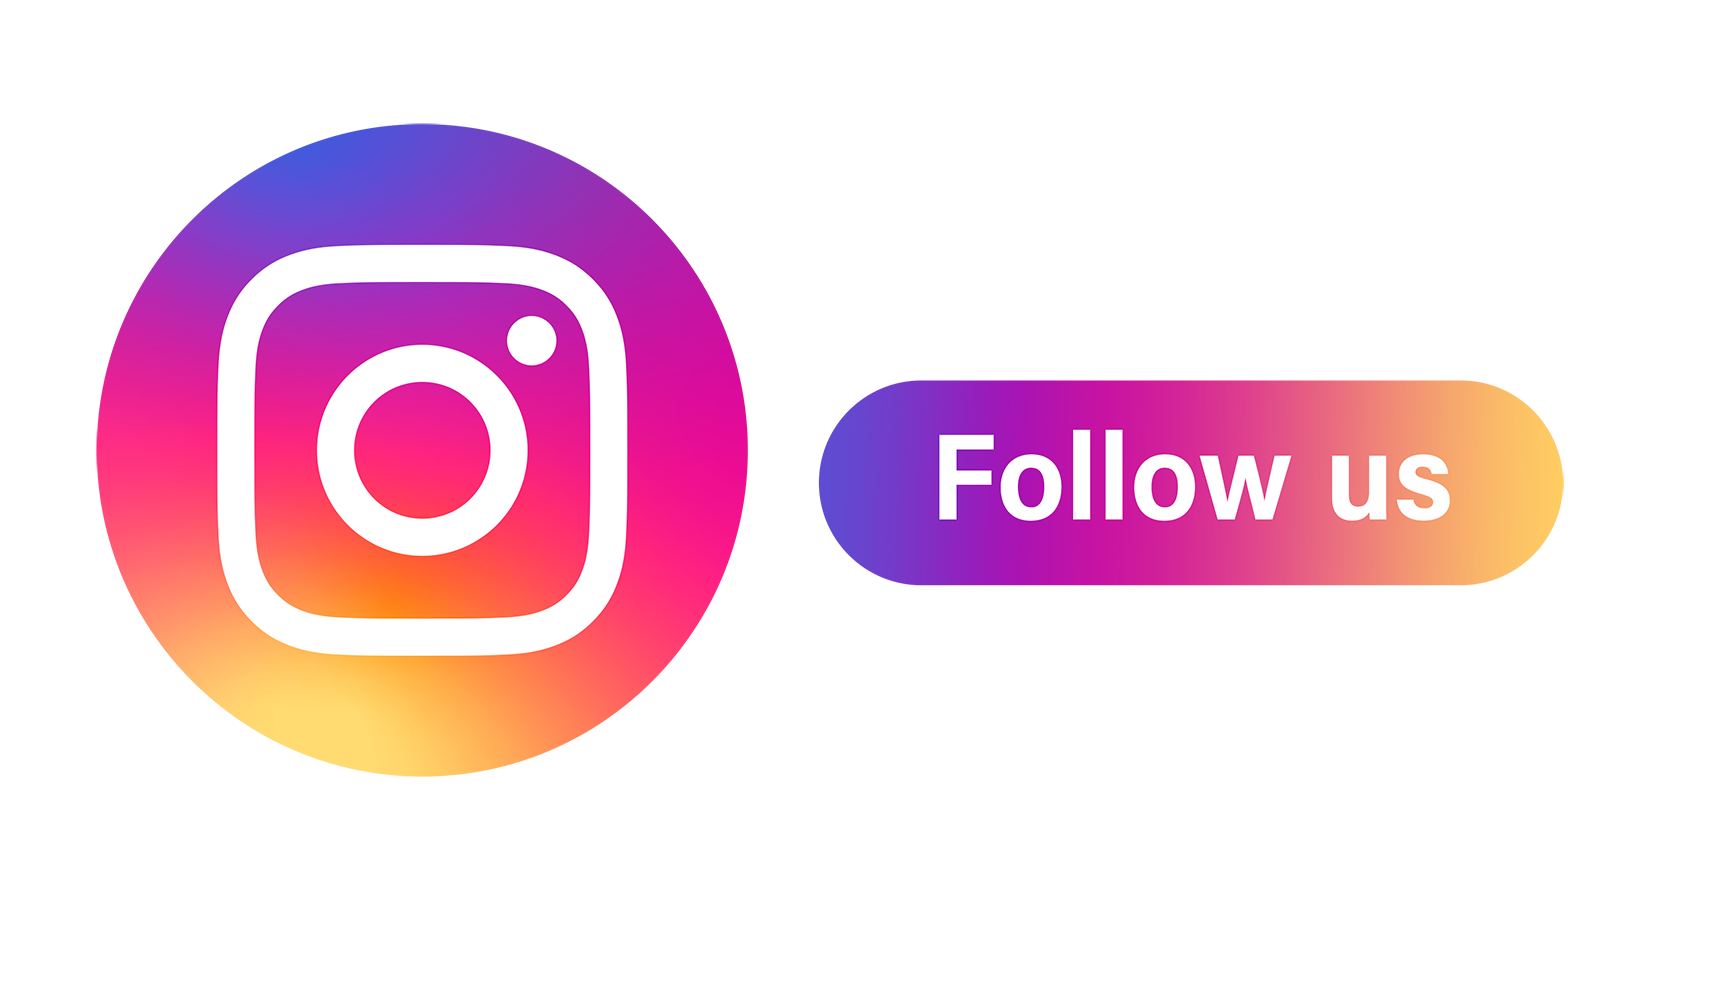 Download Instagram, Logo, Icon. Royalty-Free Vector Graphic - Pixabay